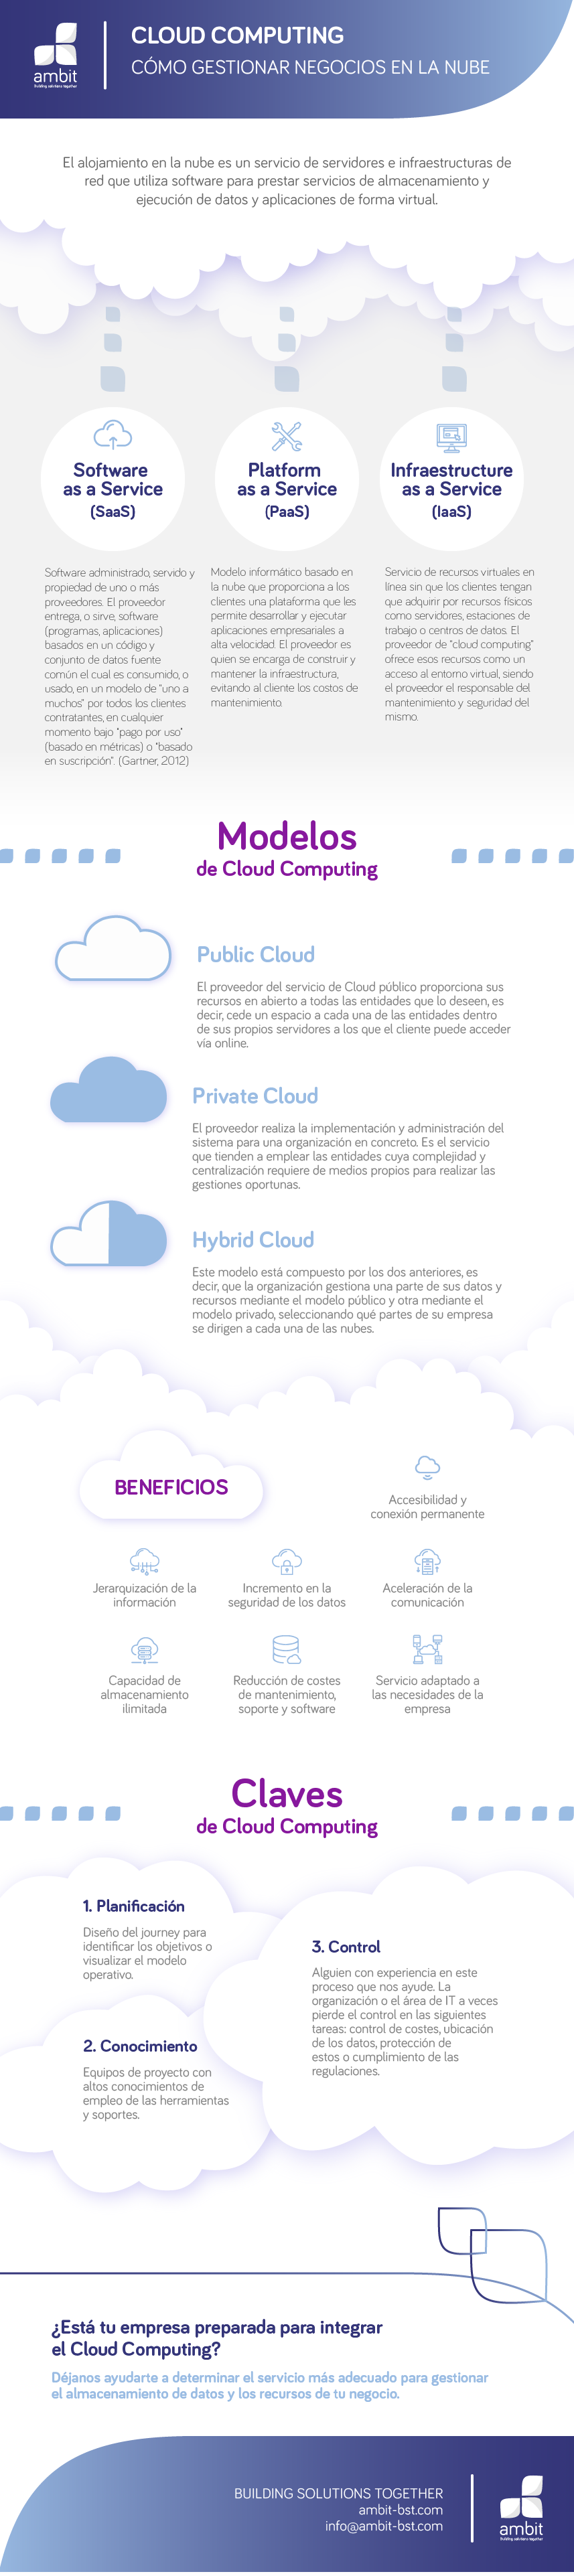 infografia cloud computing